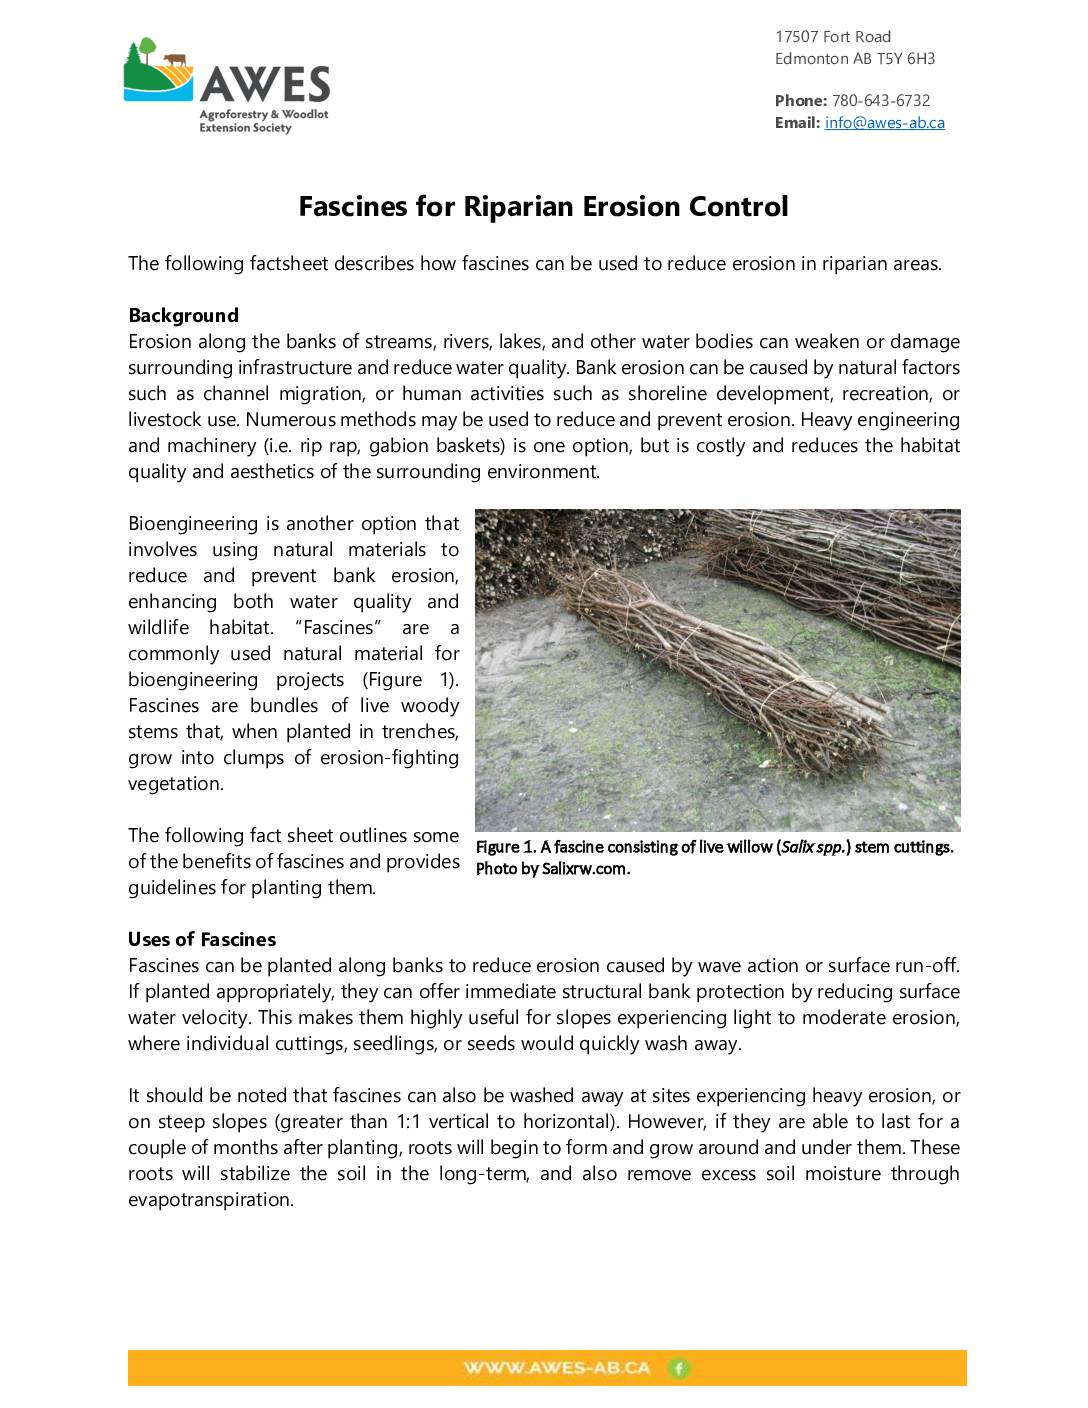 Fascines for Riparian Erosion Control